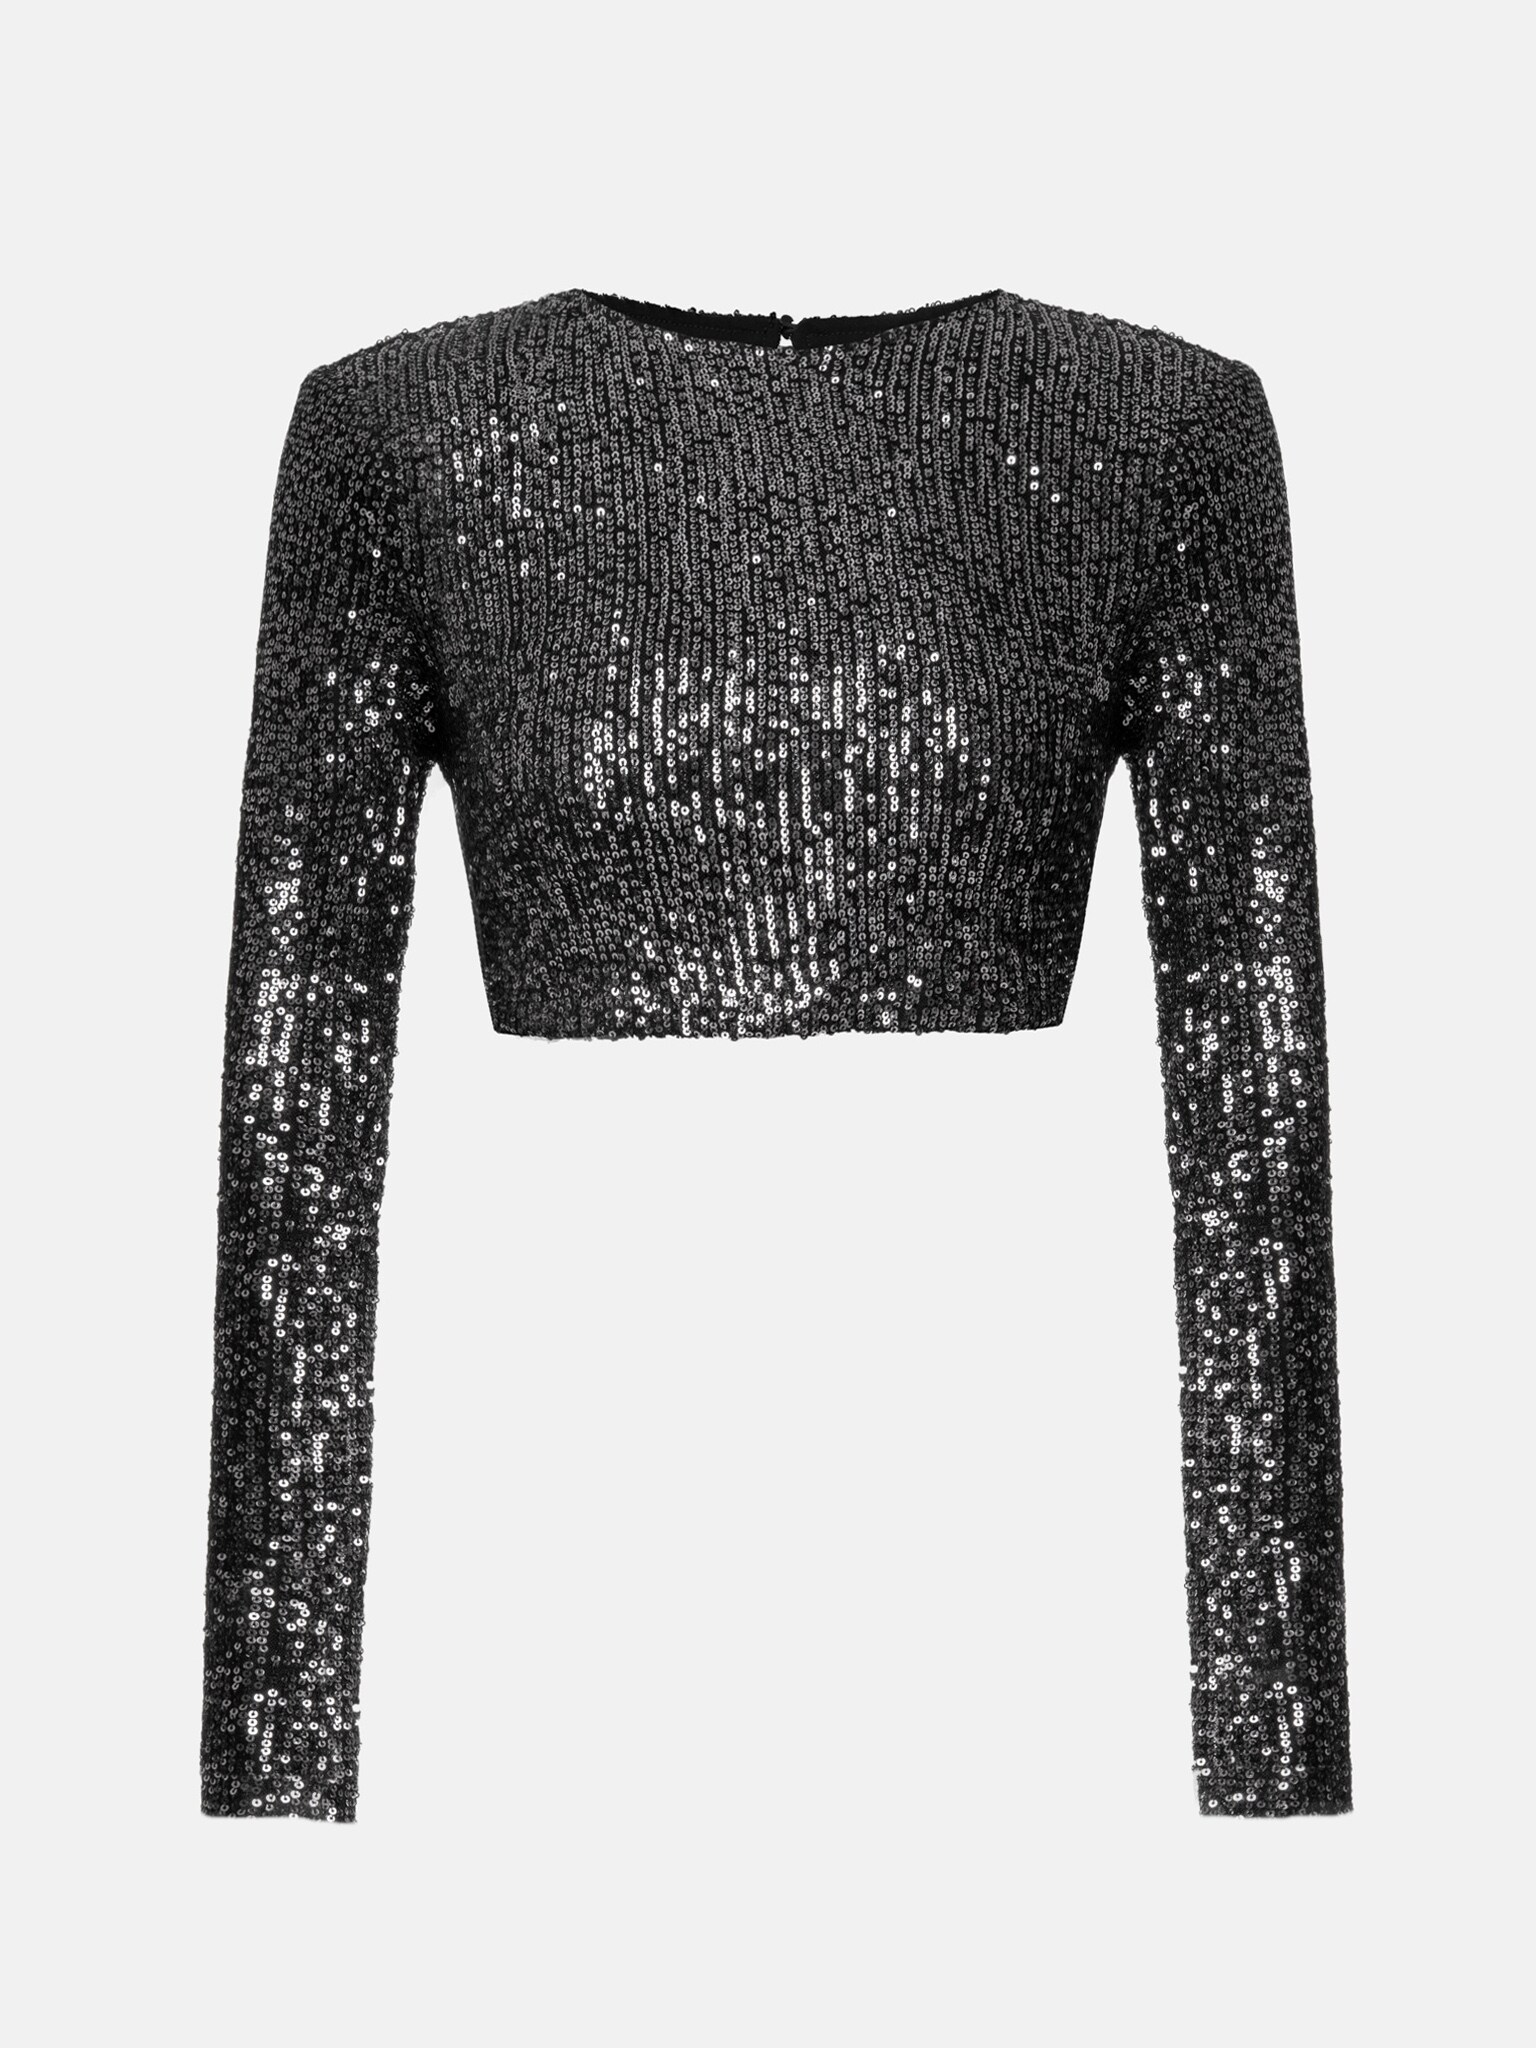 Sequined crop top :: LICHI - Online fashion store